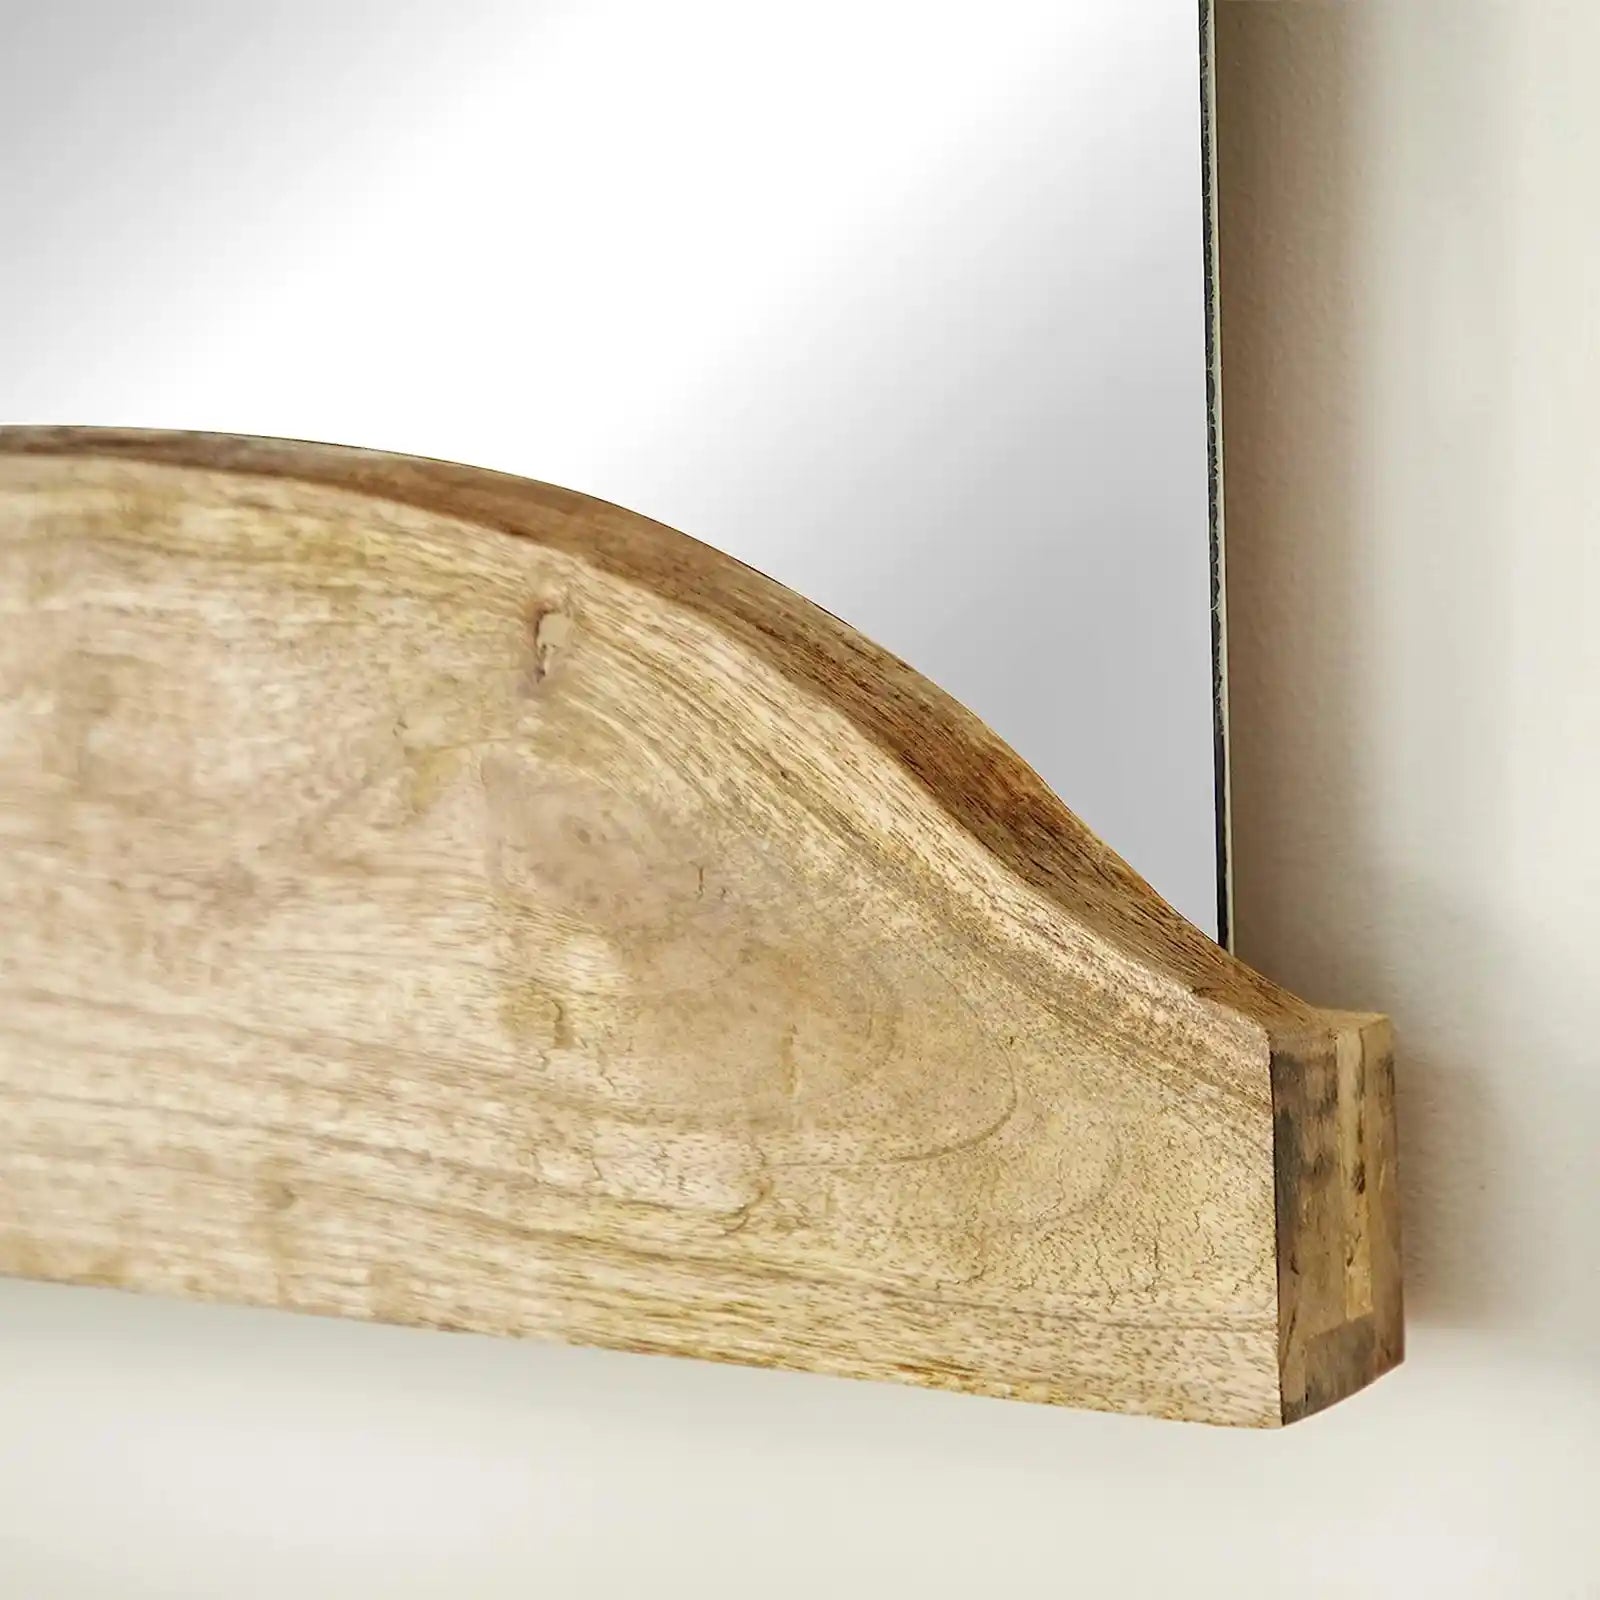 Solid Wood Handmade Live Edge Wall Mirror, Set of 2